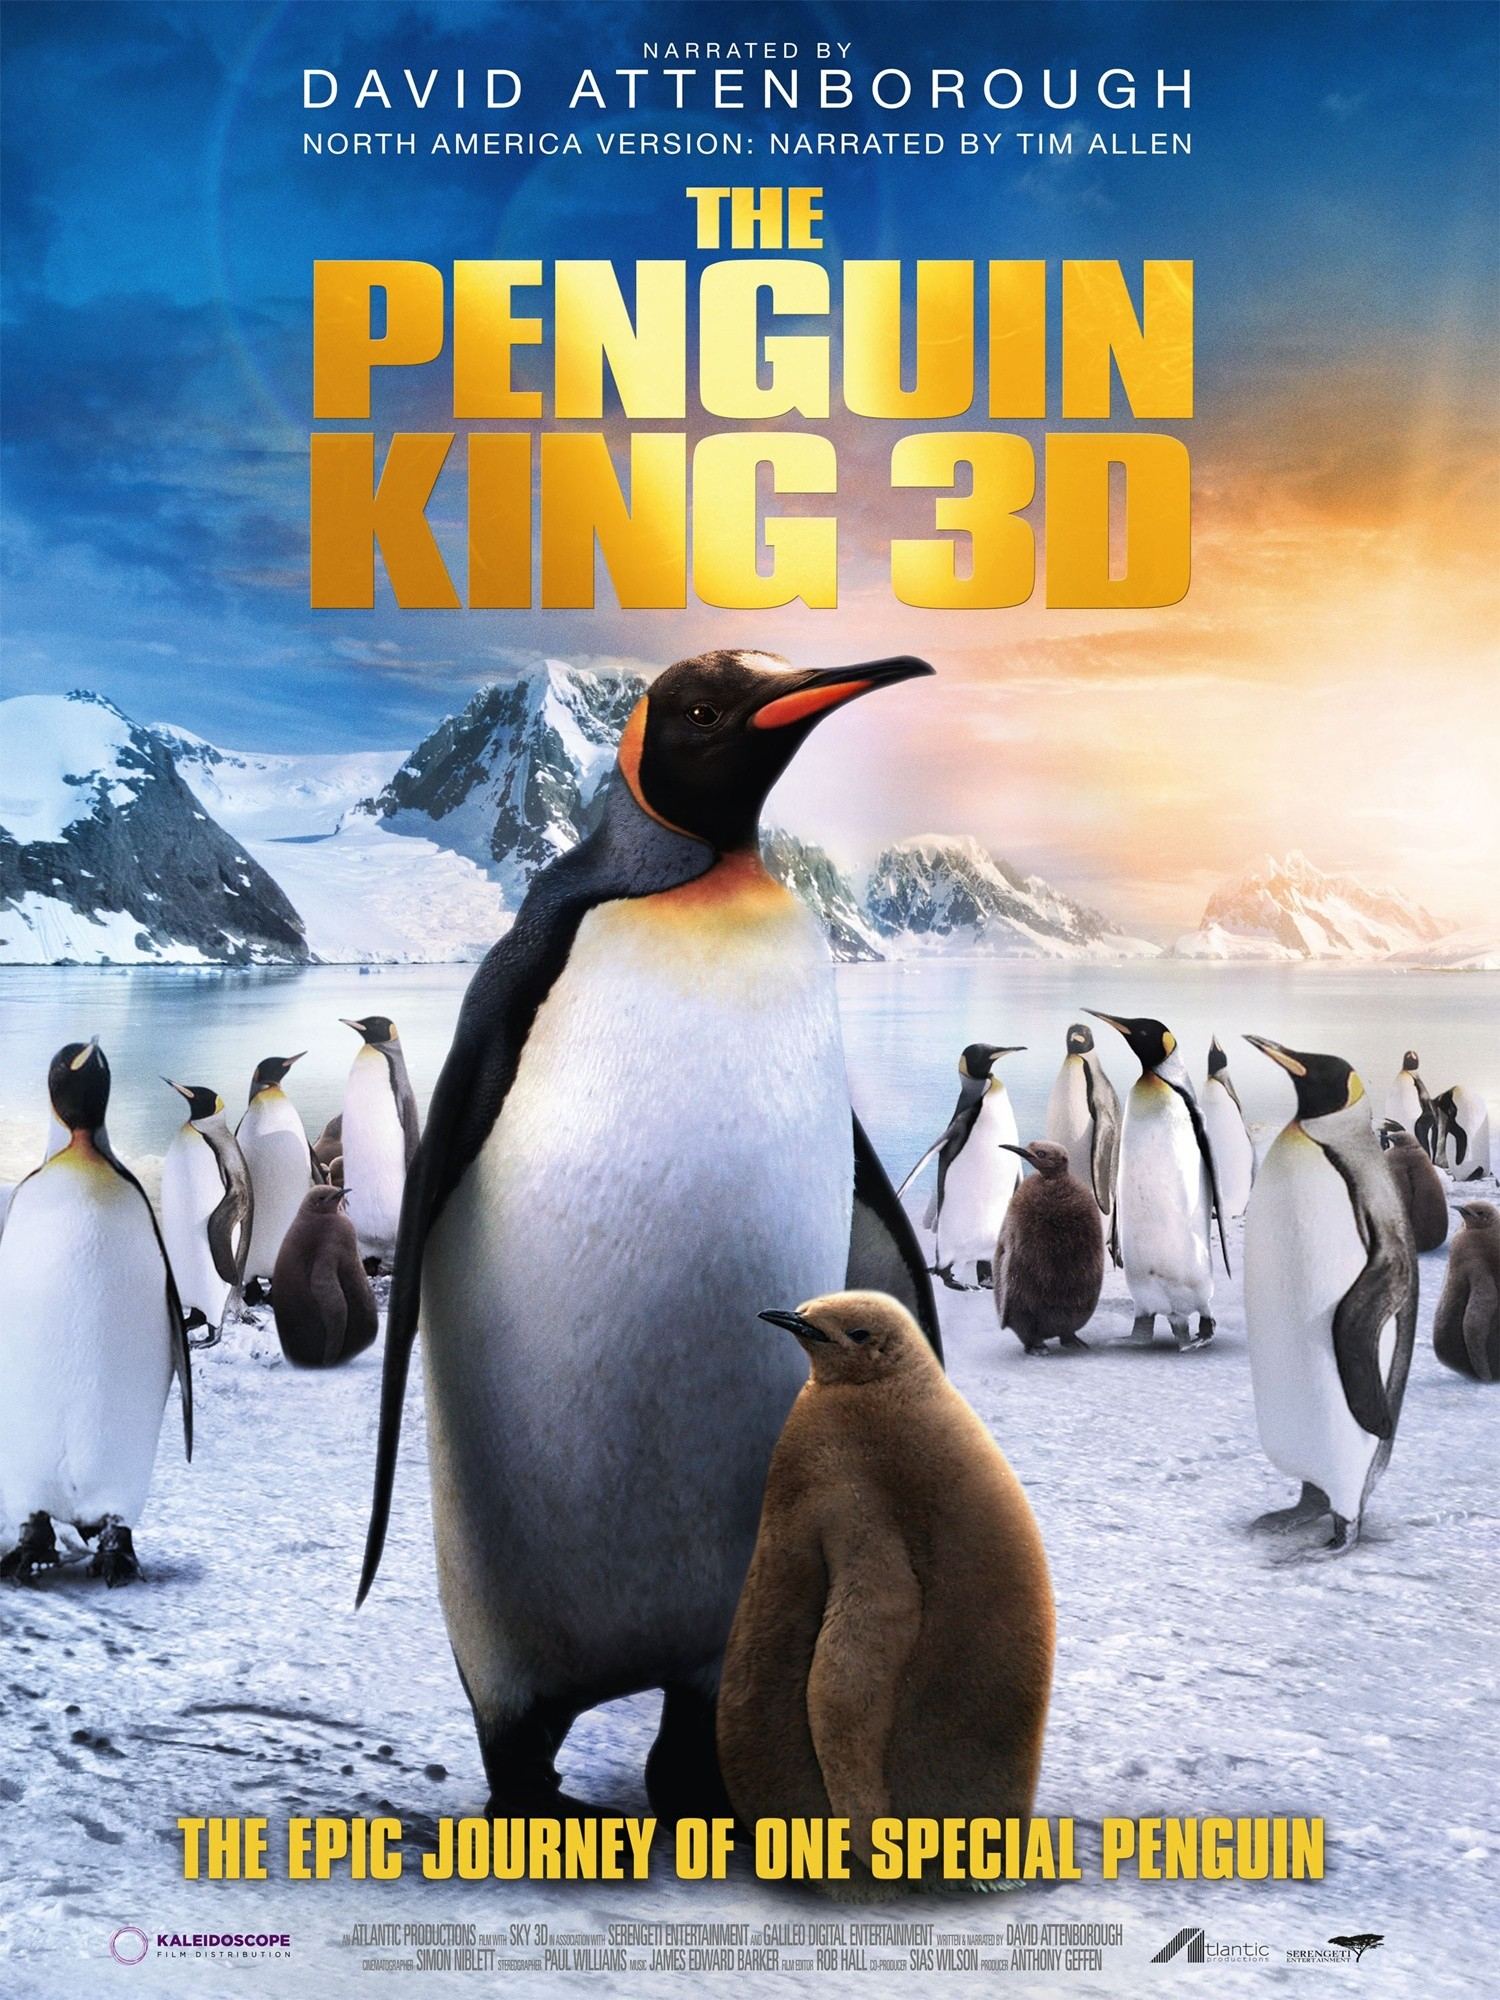 Poster of Cinedigm's Adventures of the Penguin King (2013)